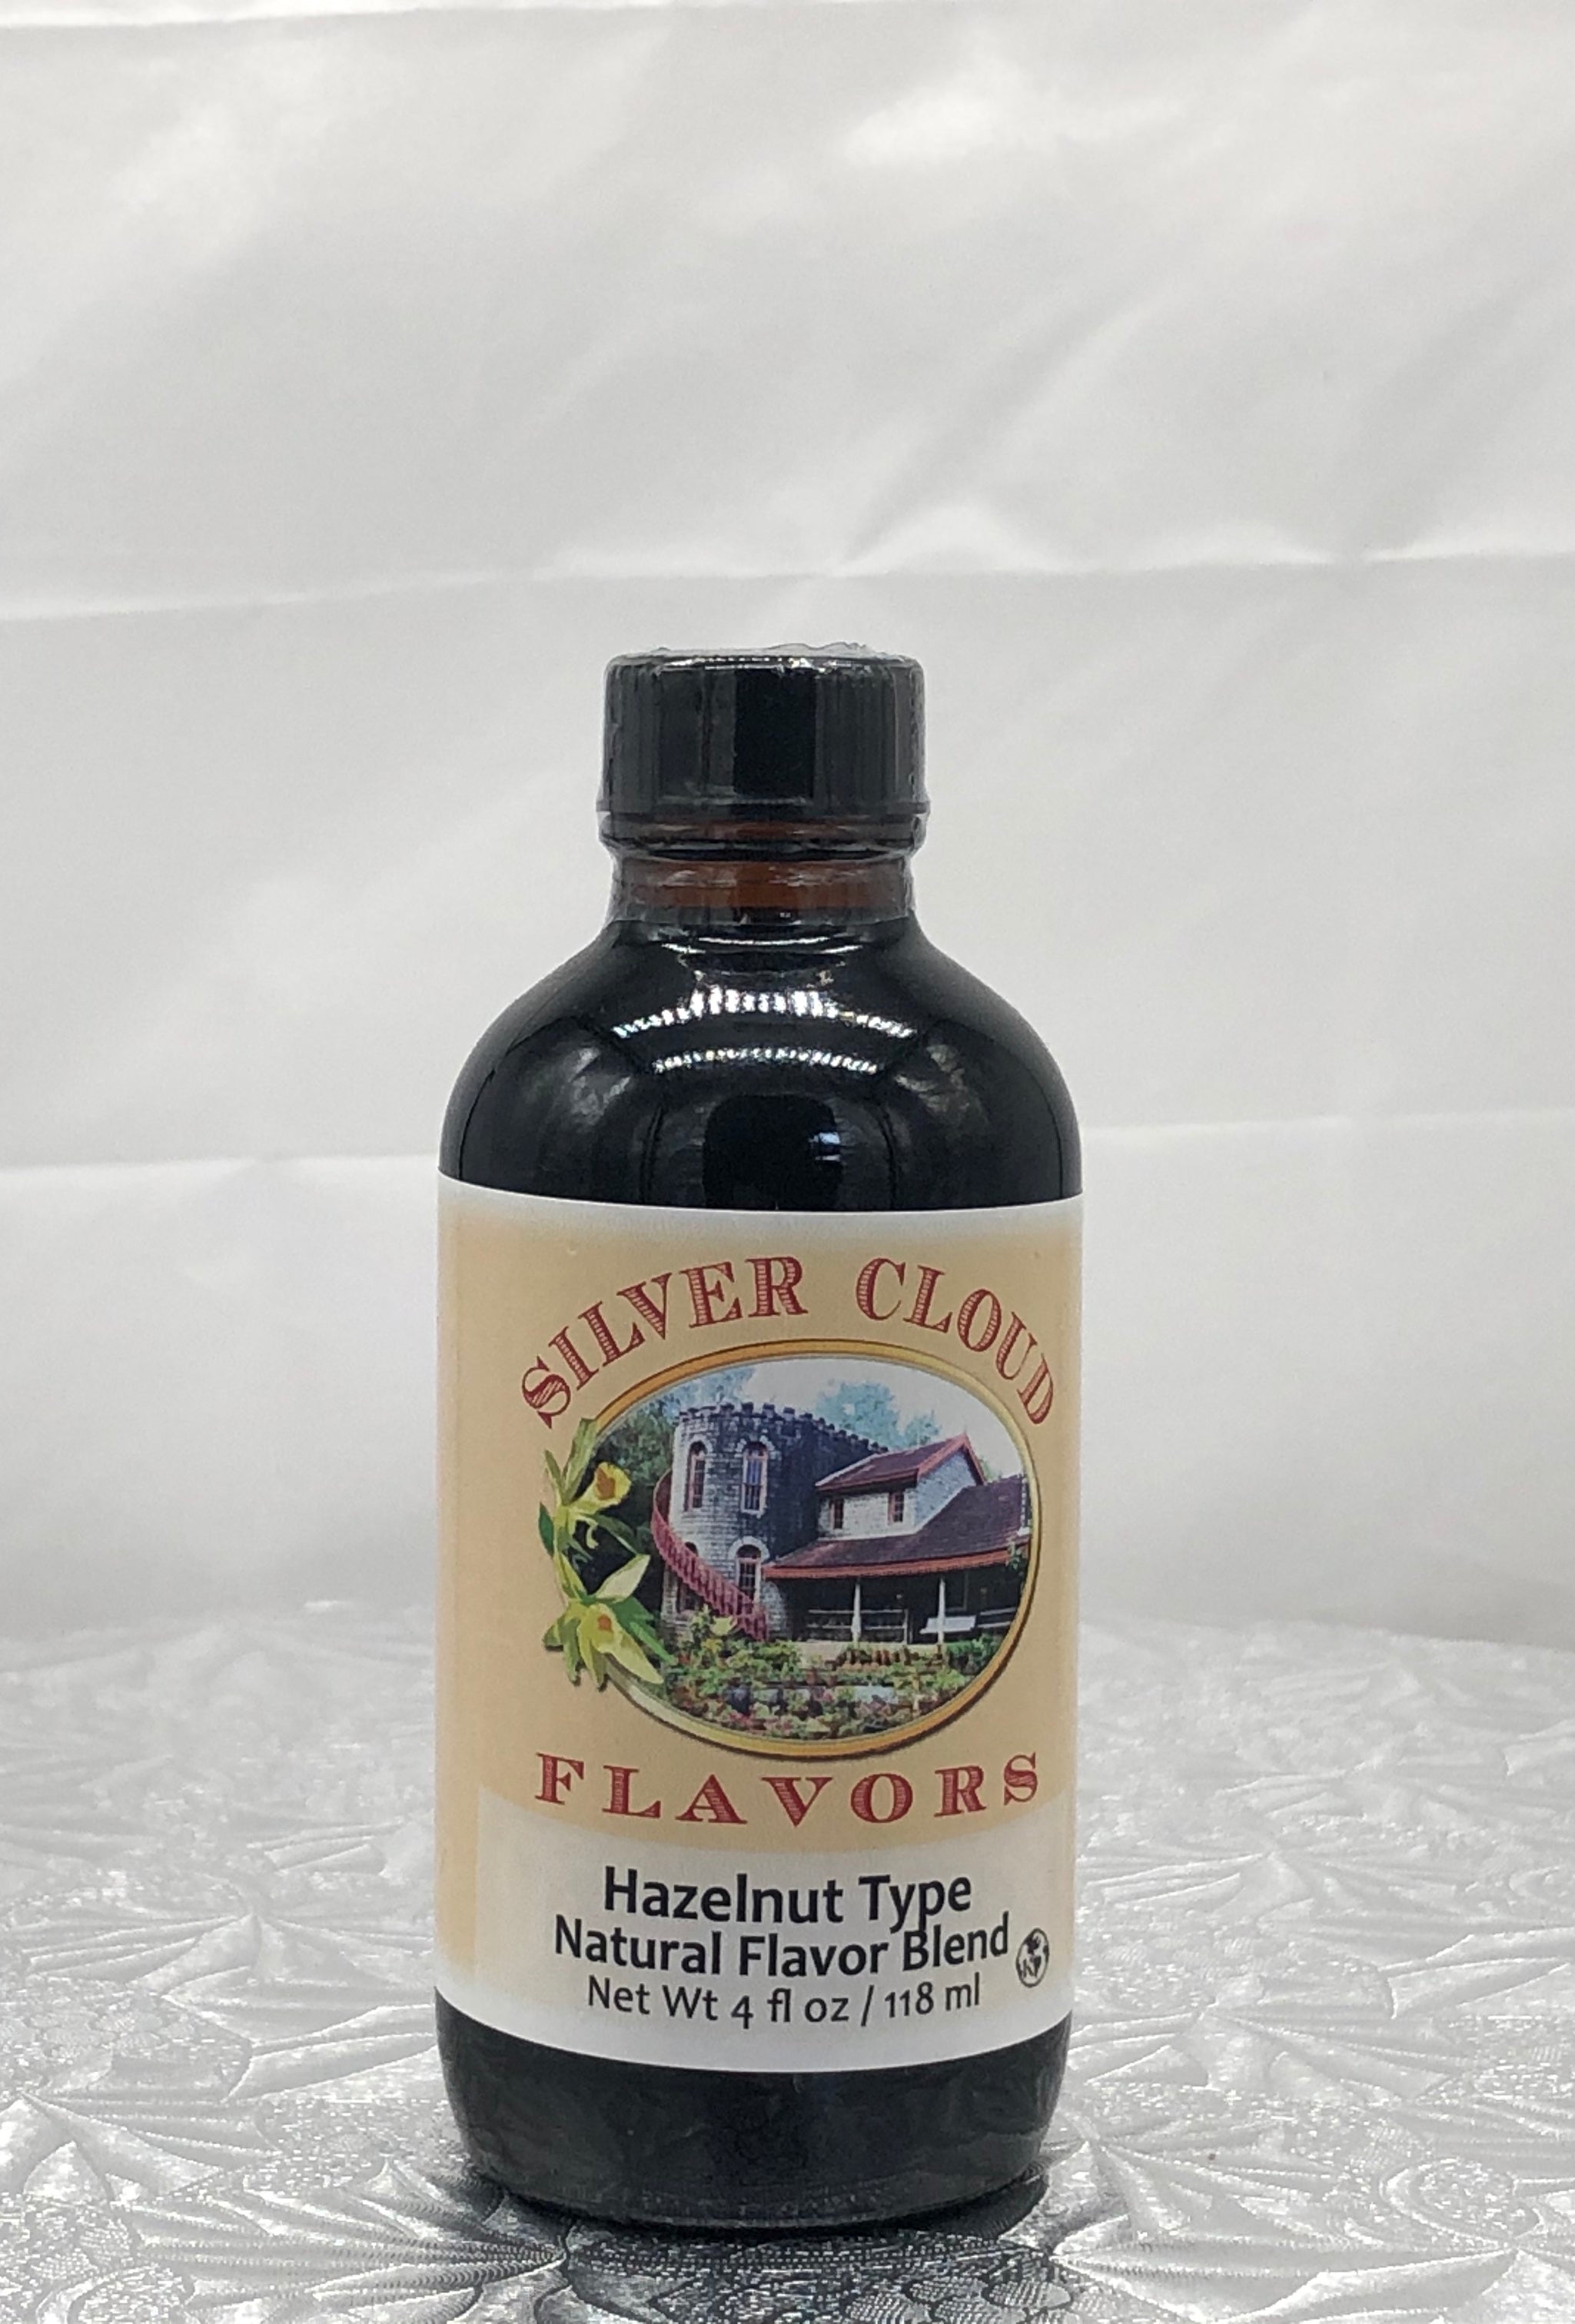 Hazelnut Natural Flavor Blend, 4oz, Silver Cloud